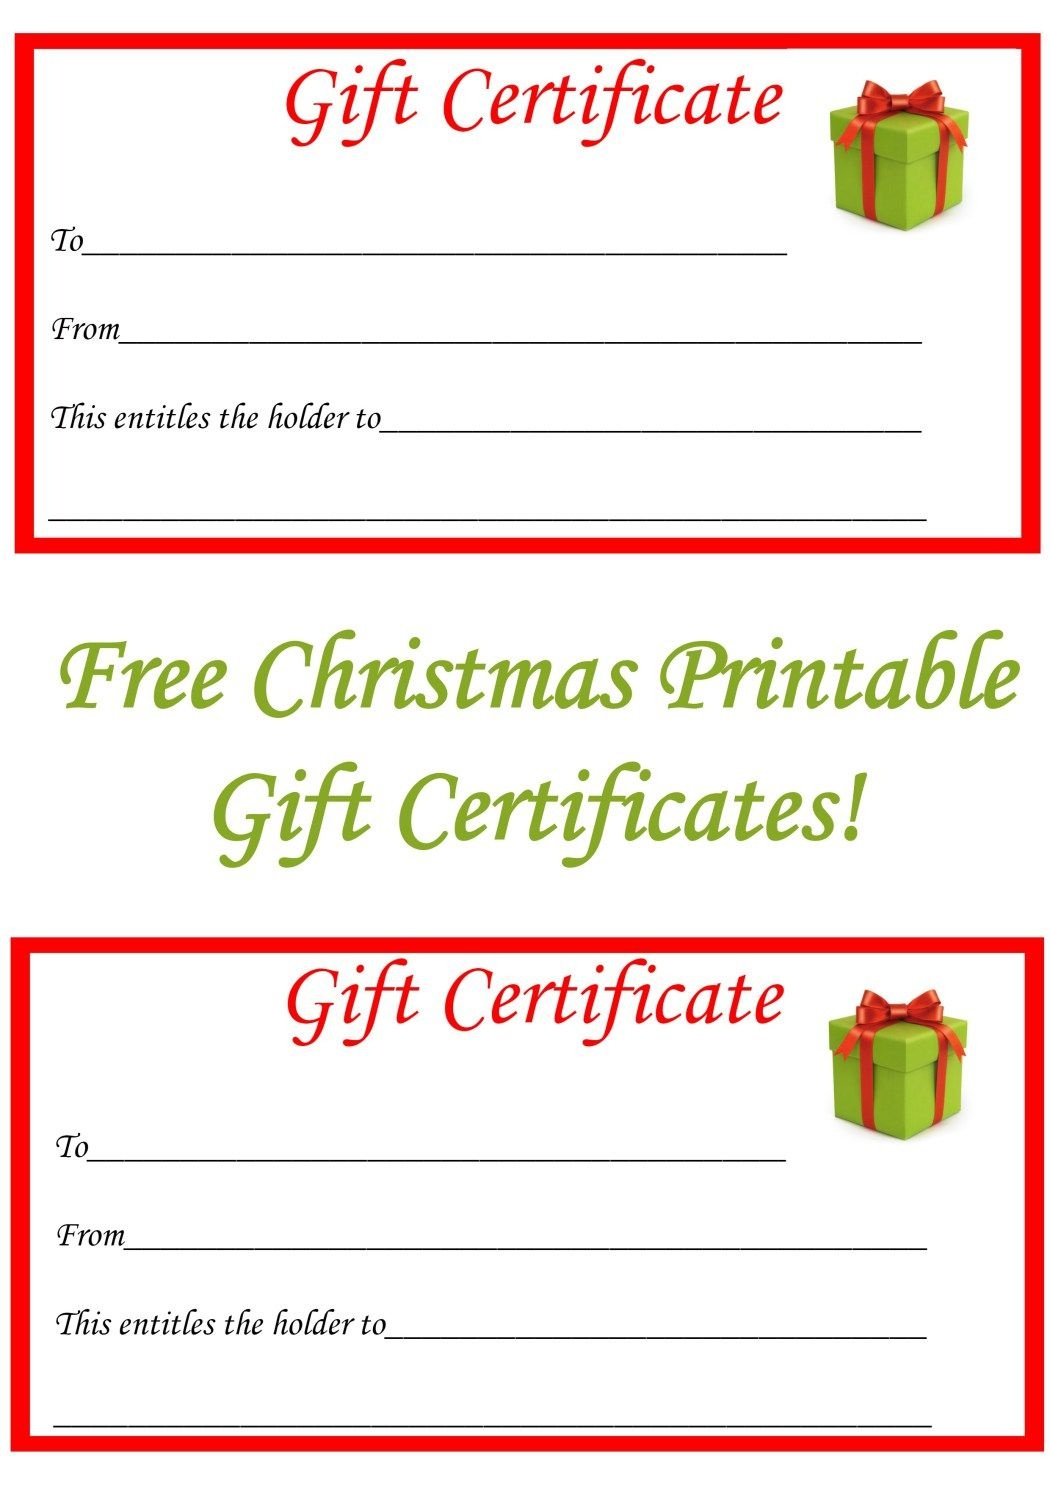 Free Christmas Printable Gift Certificates | Gift Ideas | Christmas - Free Printable Gift Cards